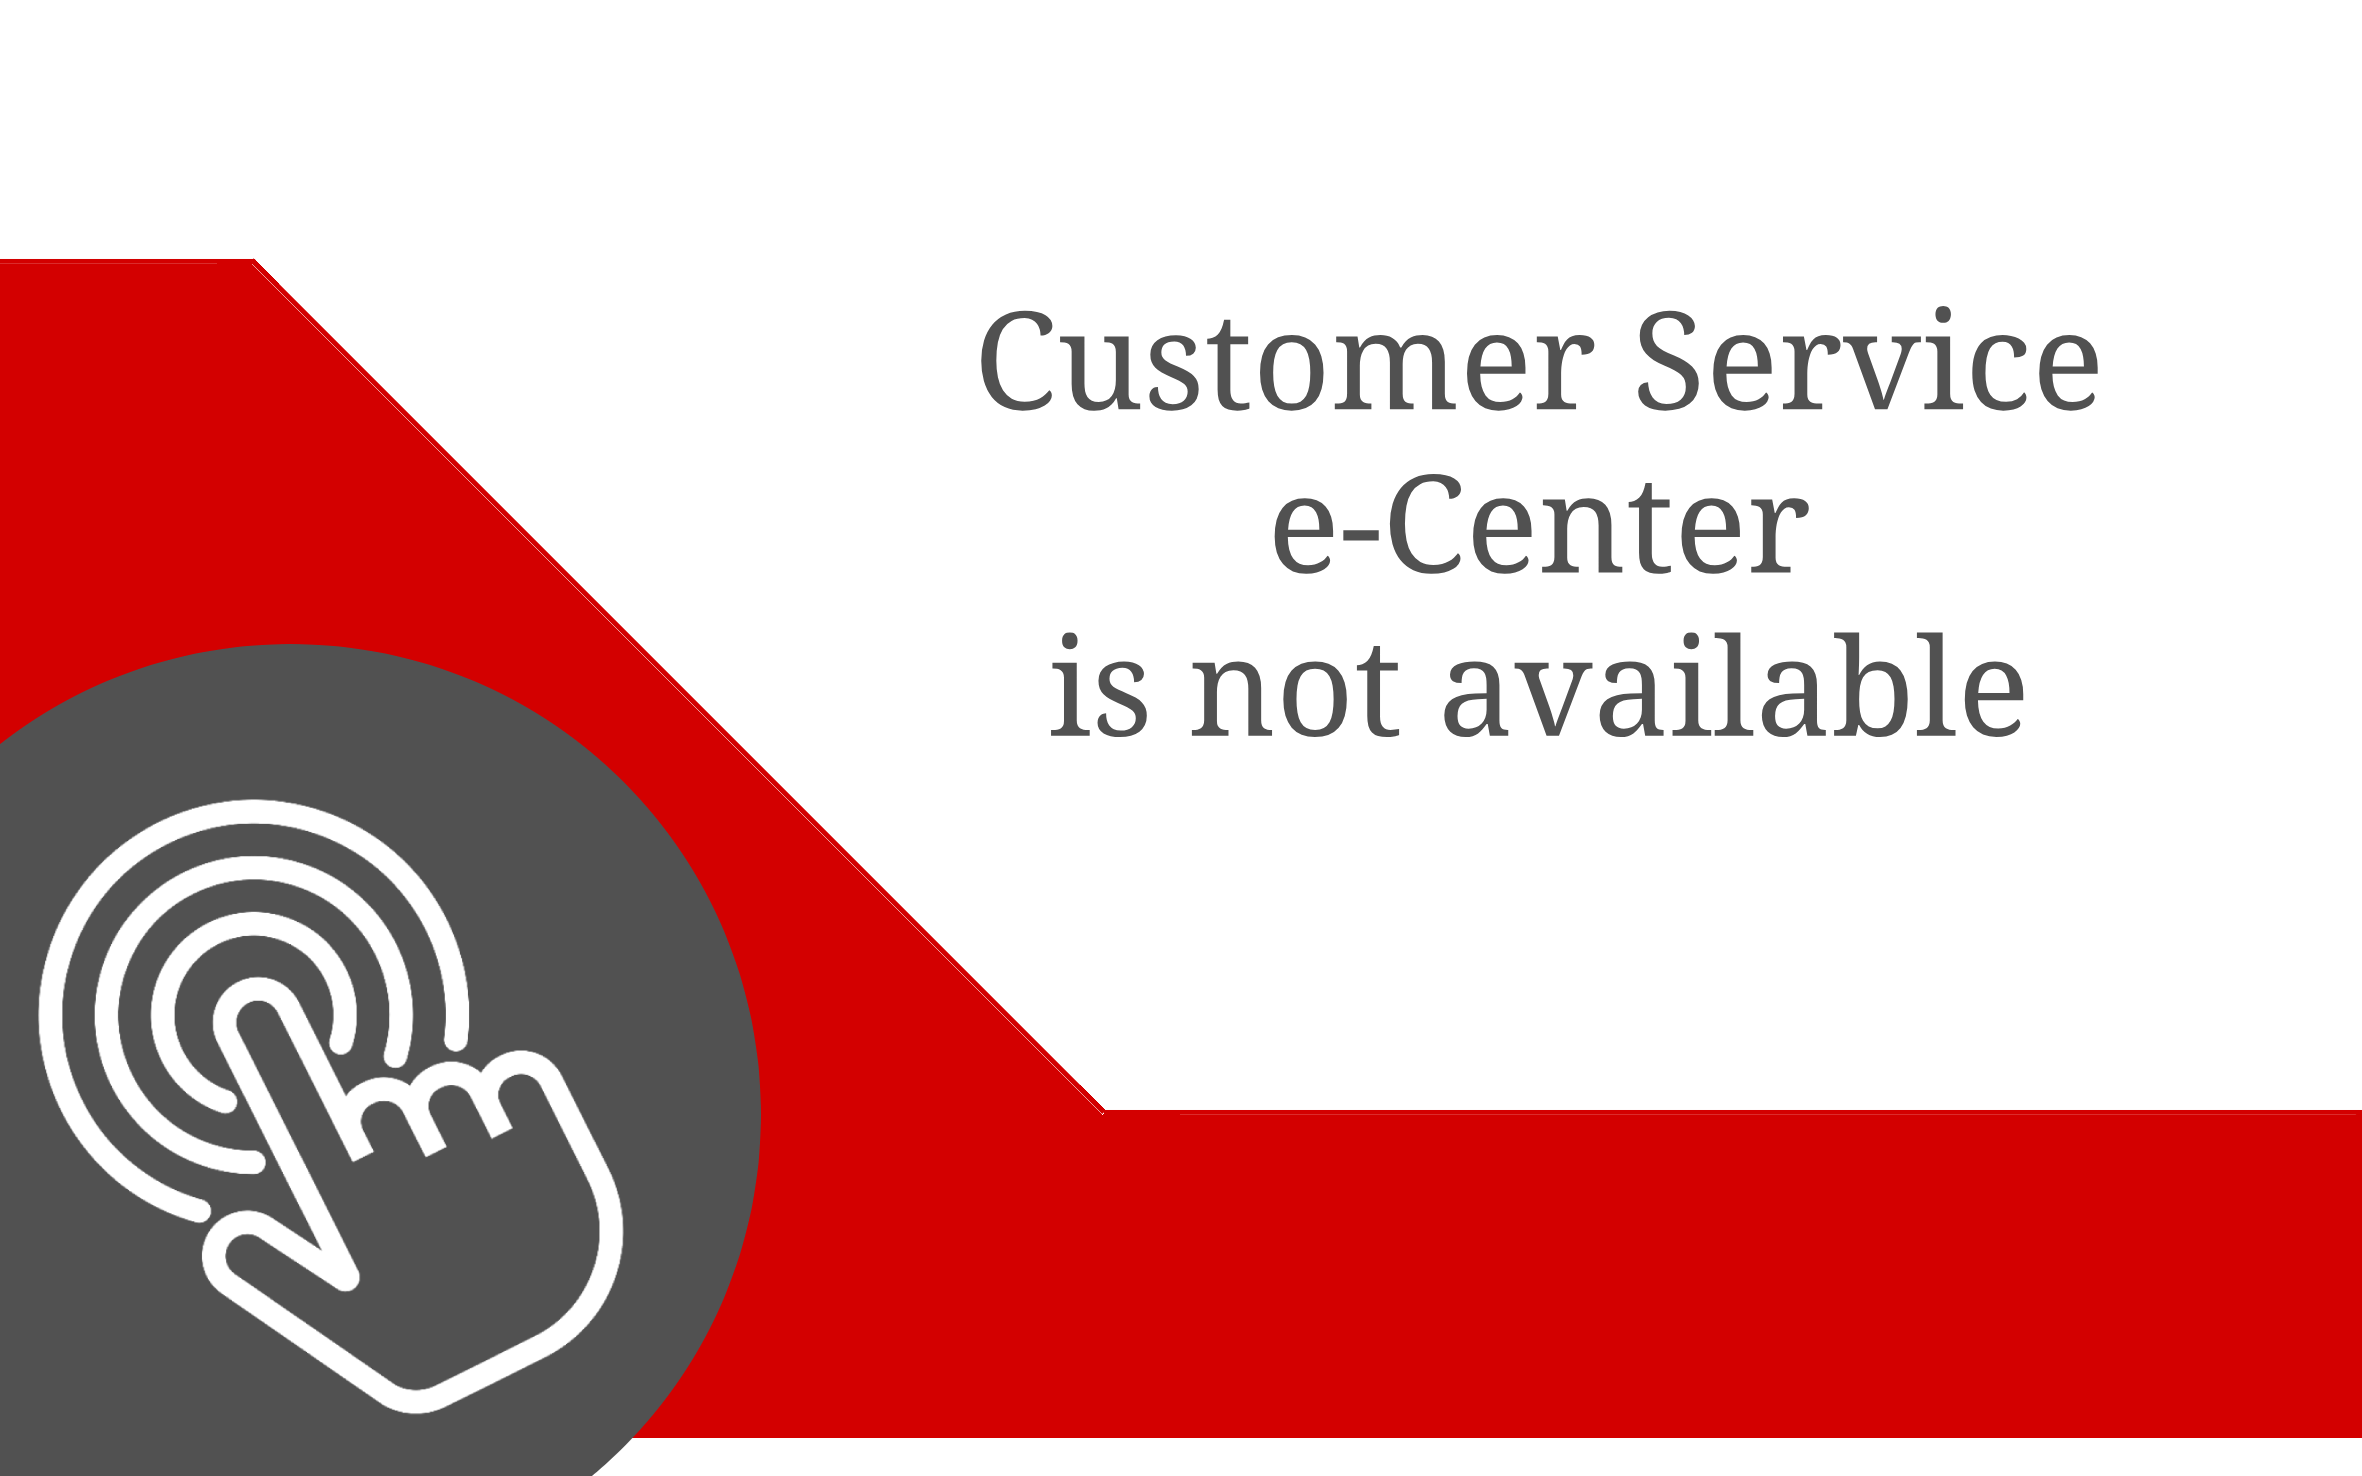 Customer Services Center